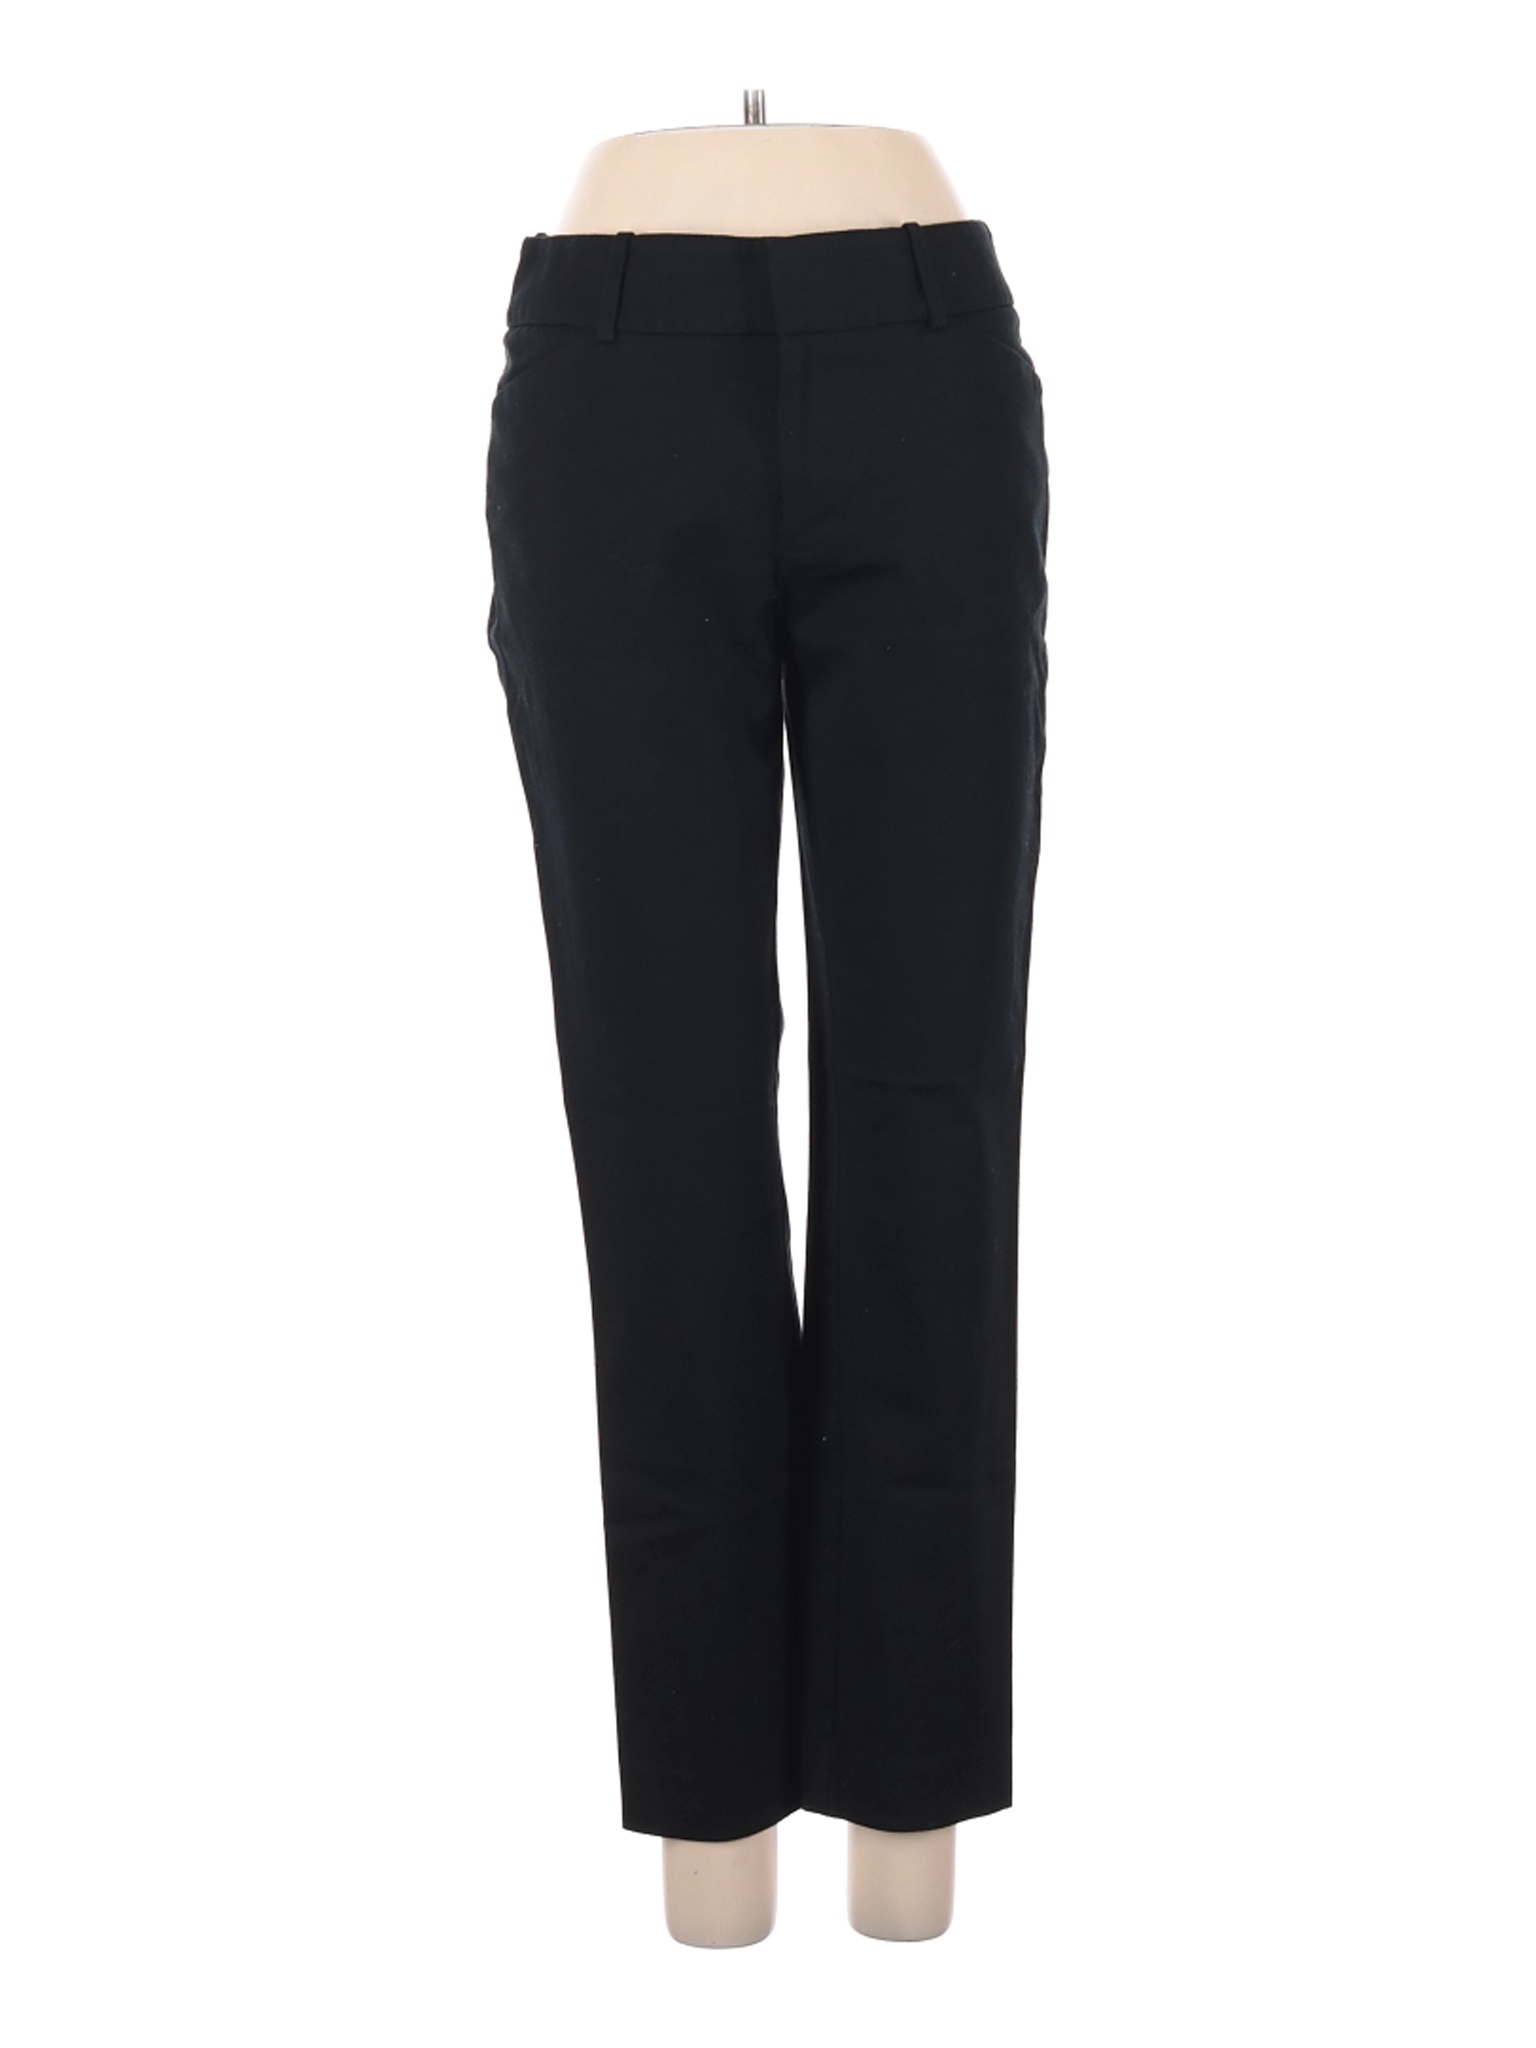 A New Day Women Black Dress Pants 4 | eBay